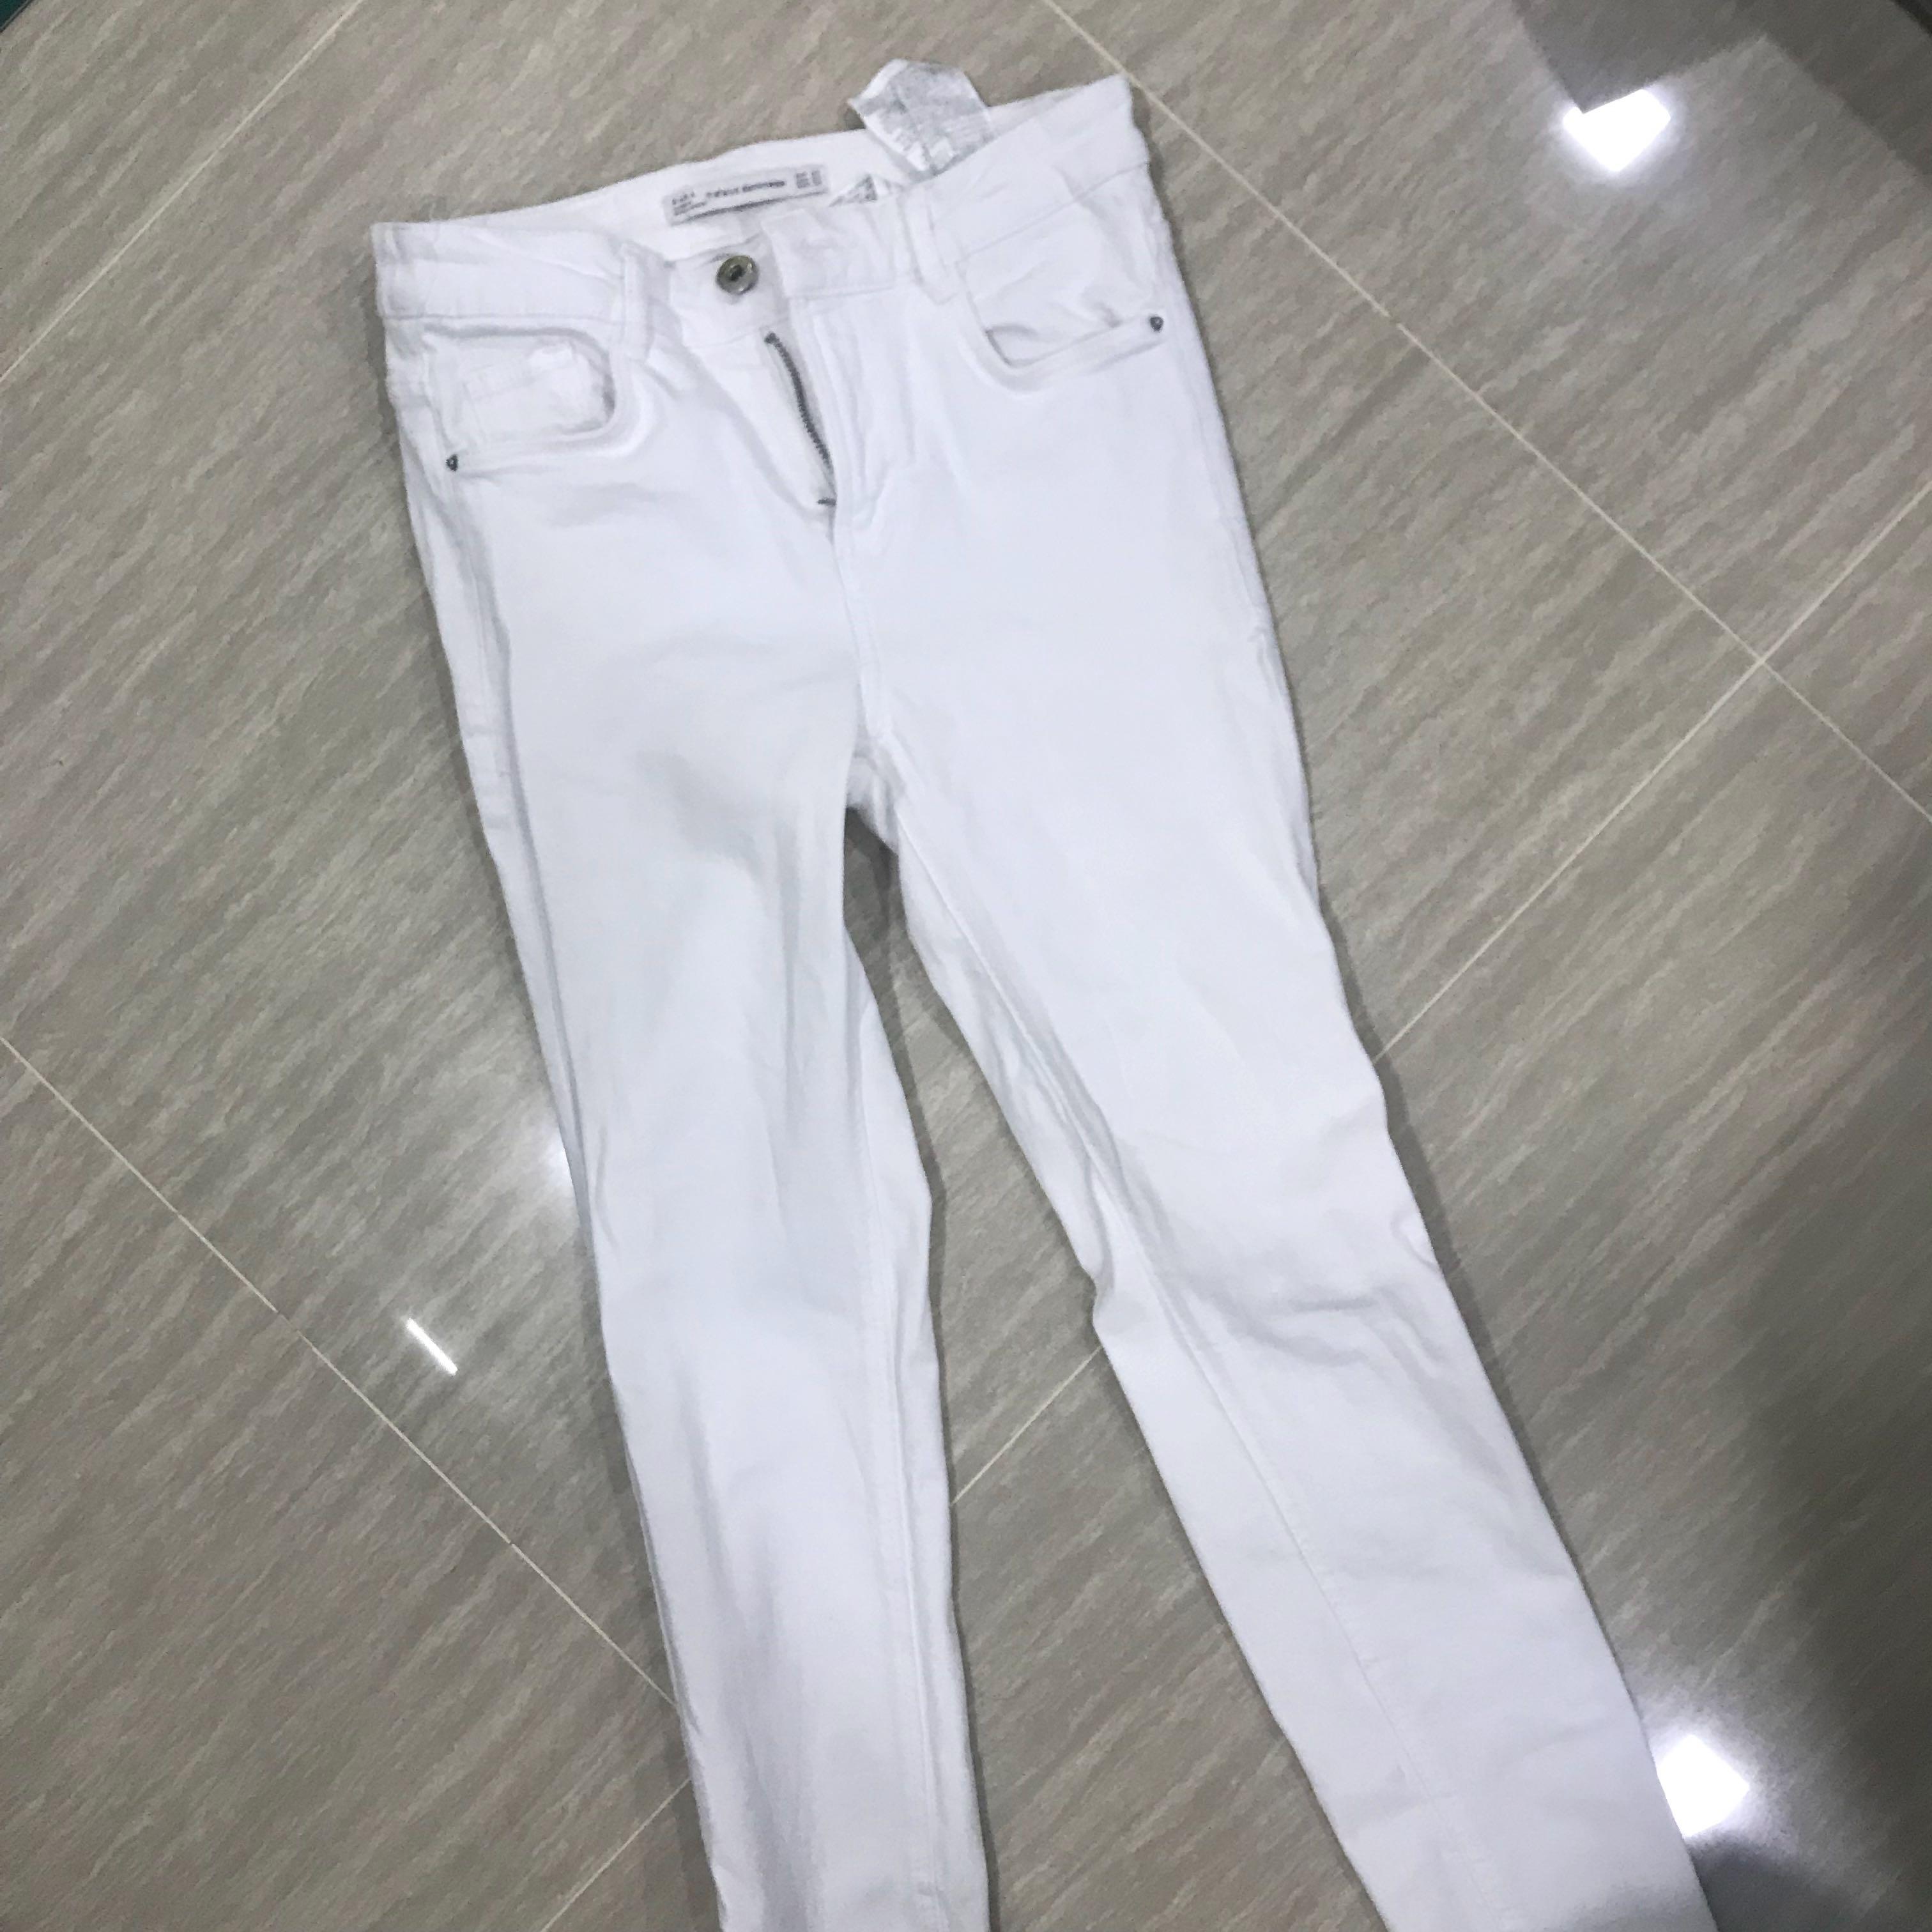 zara high waisted white jeans